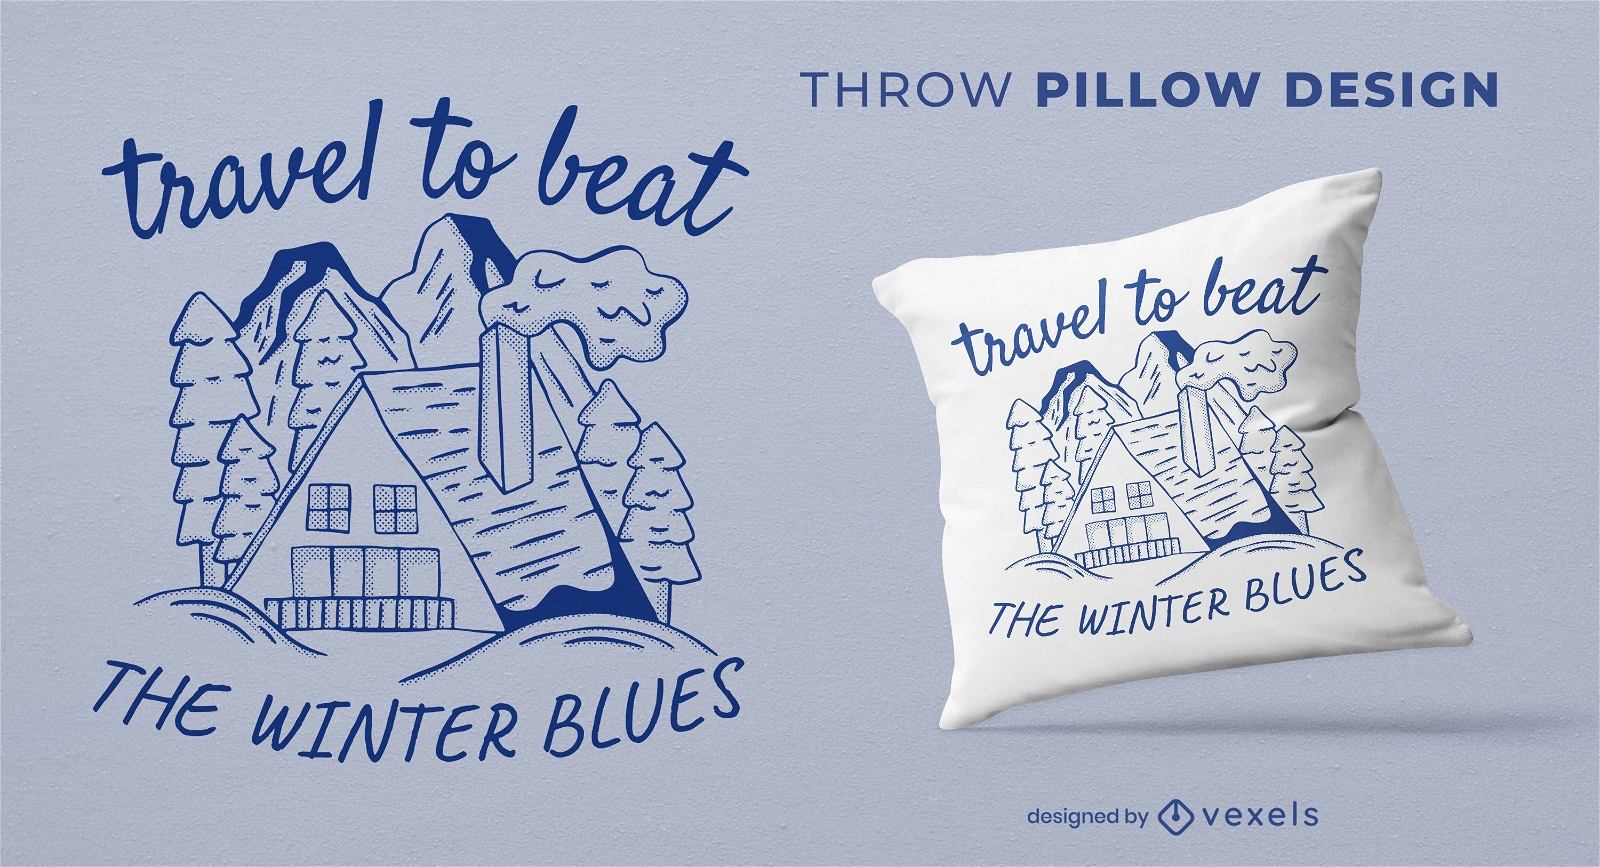 Travel to beat winter blues throw pillow design